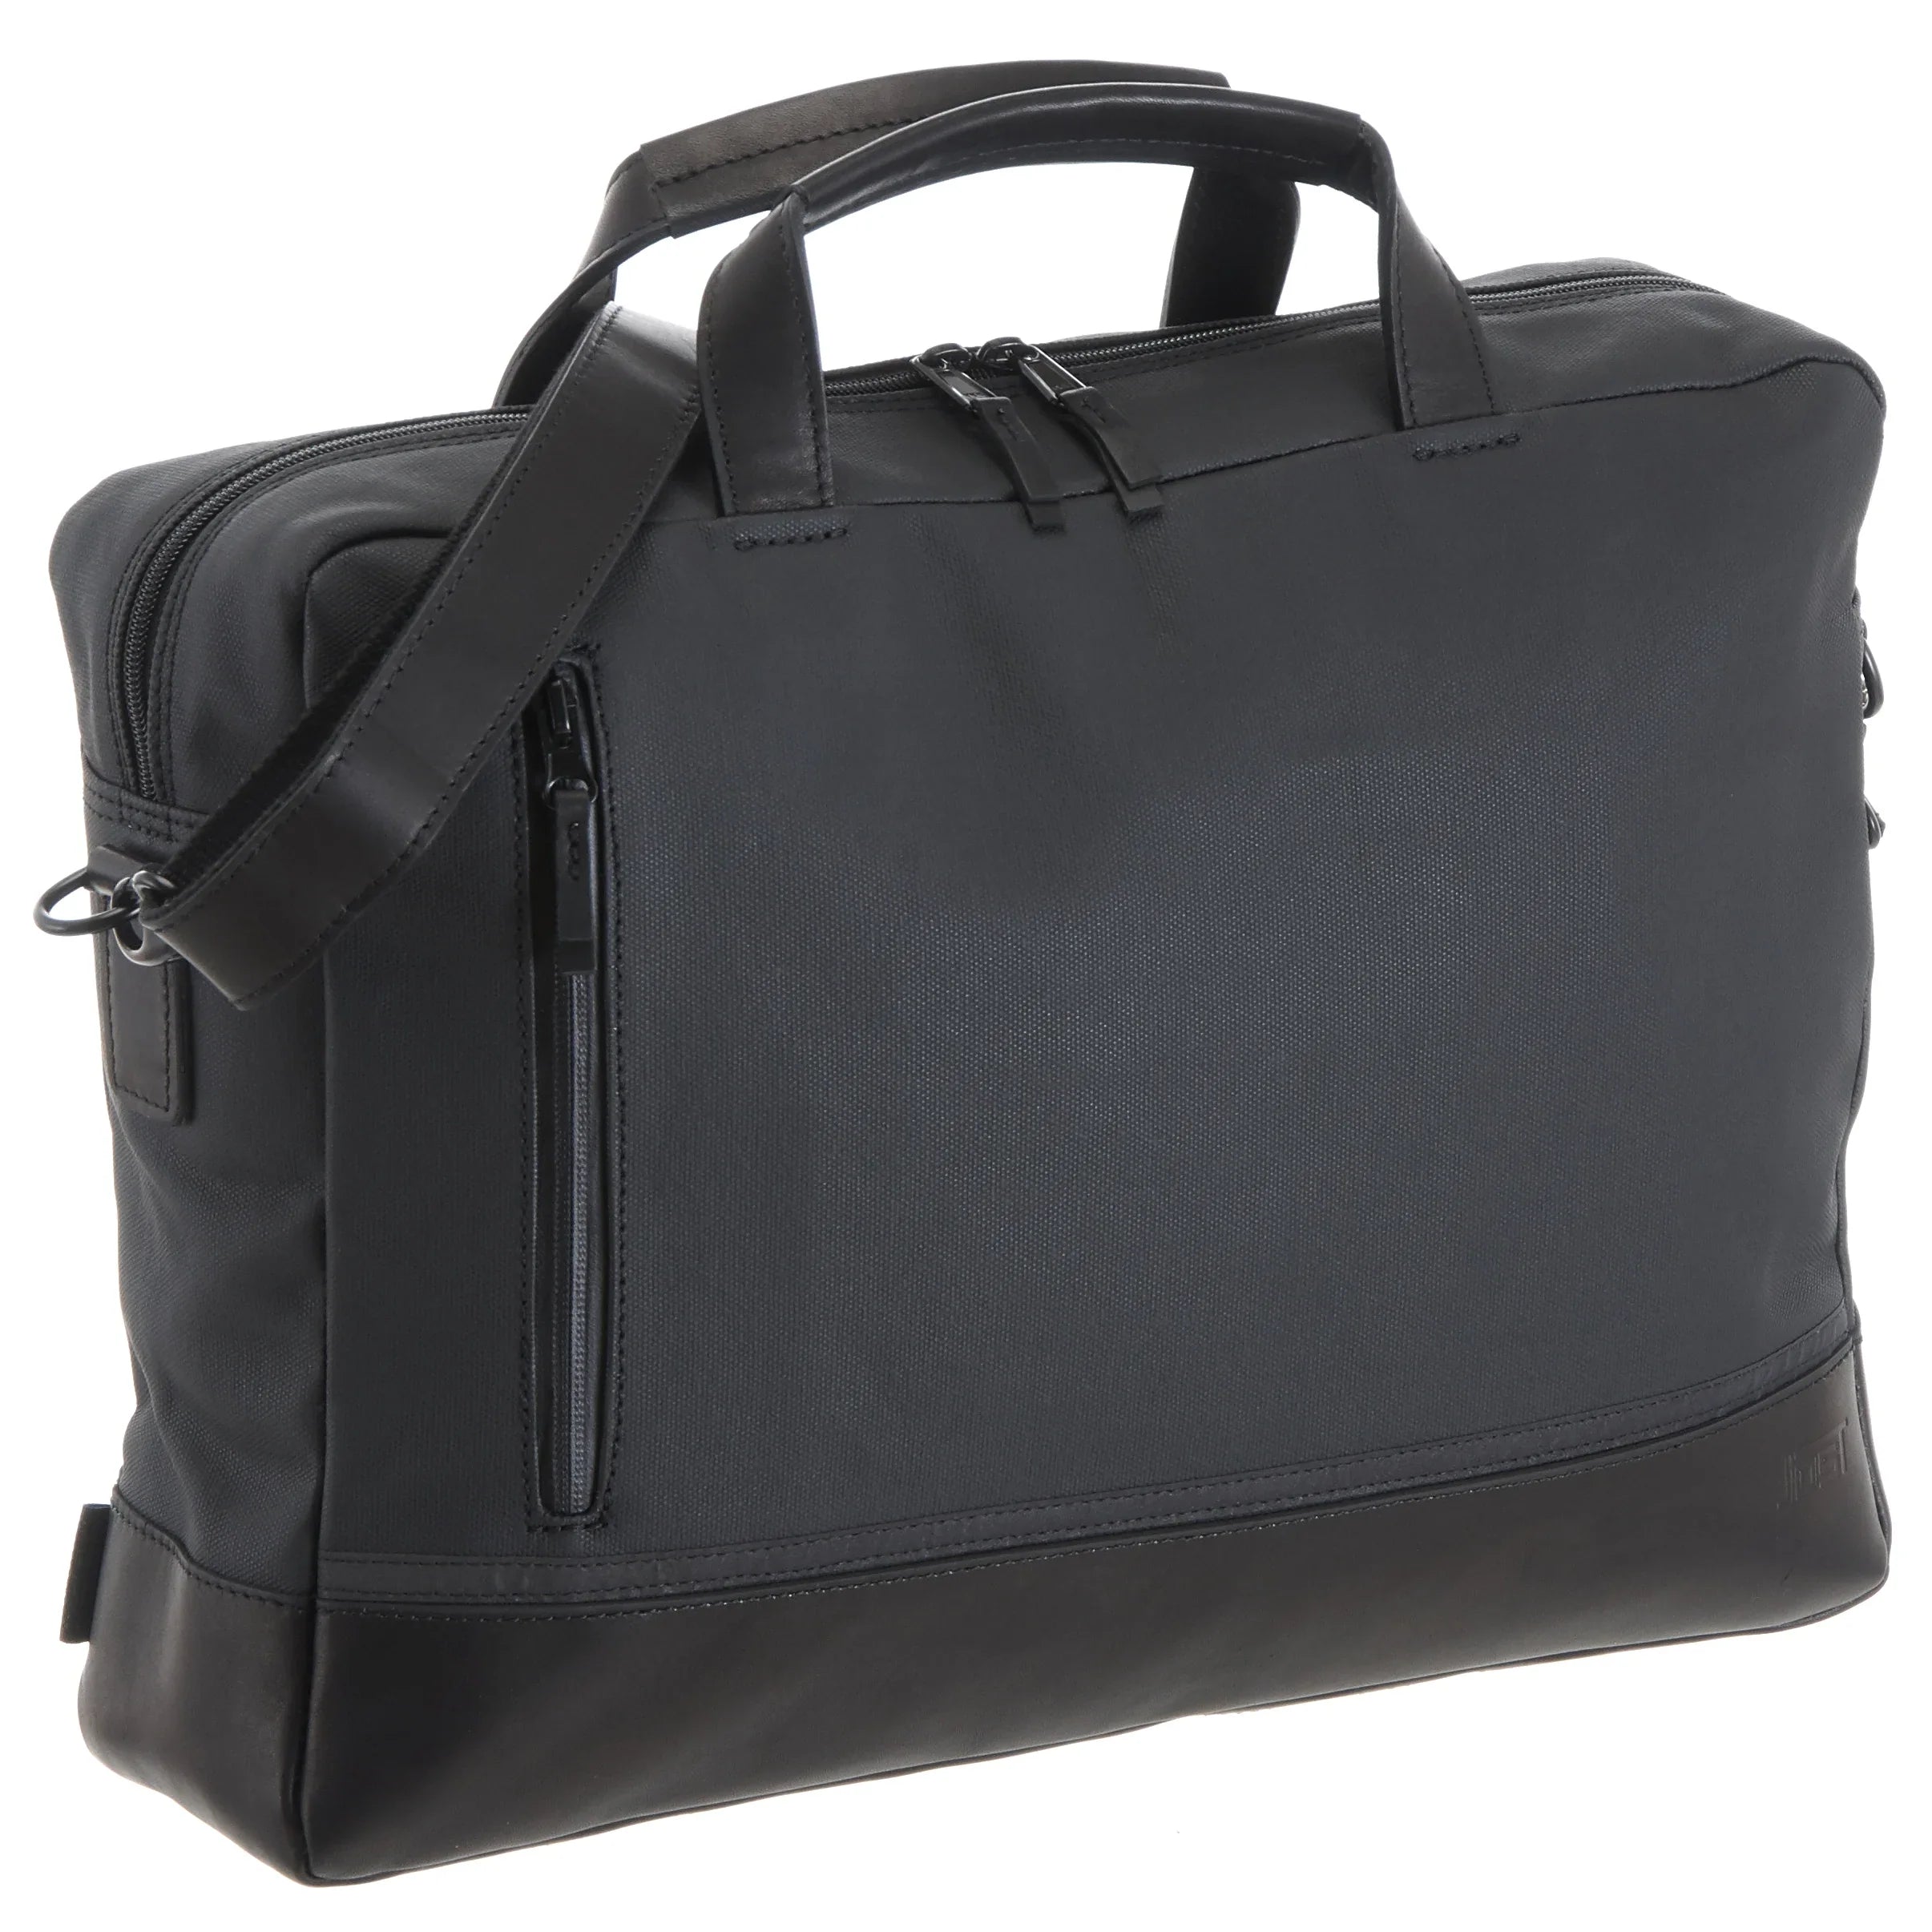 Jost Billund business bag 40 cm - black